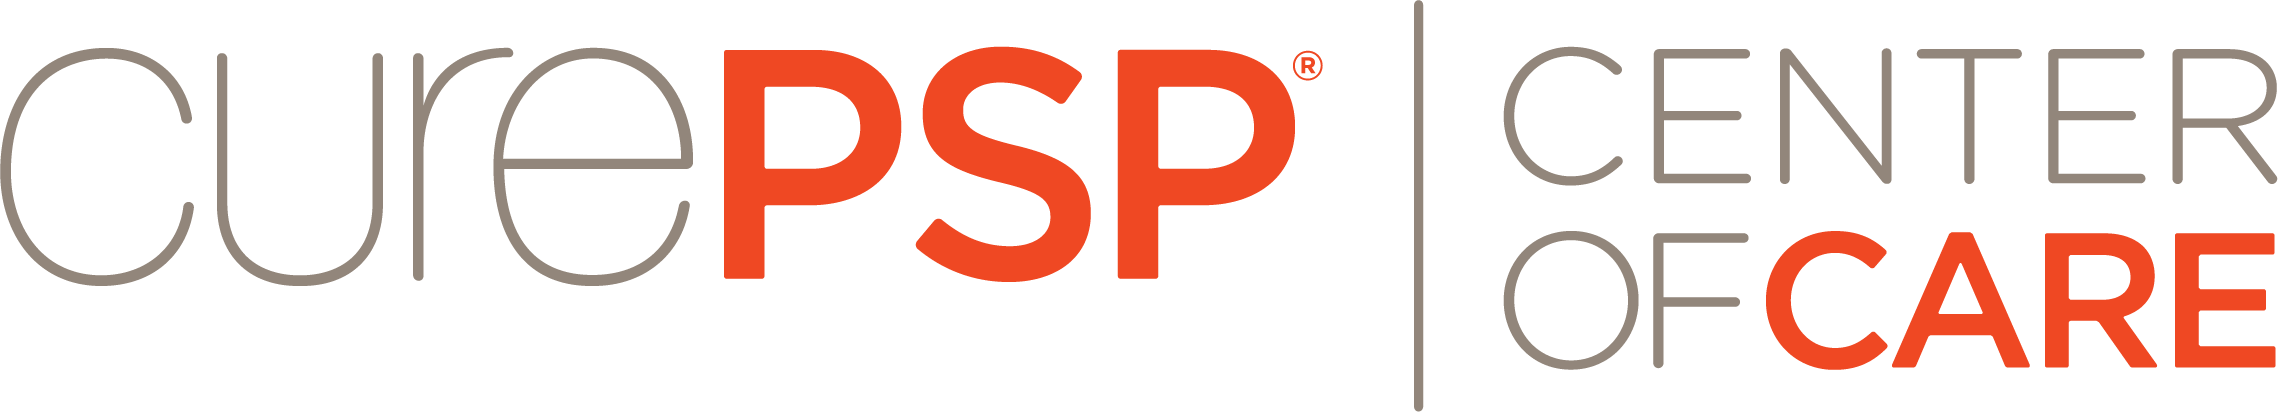 CurePSP Centers of Care logo